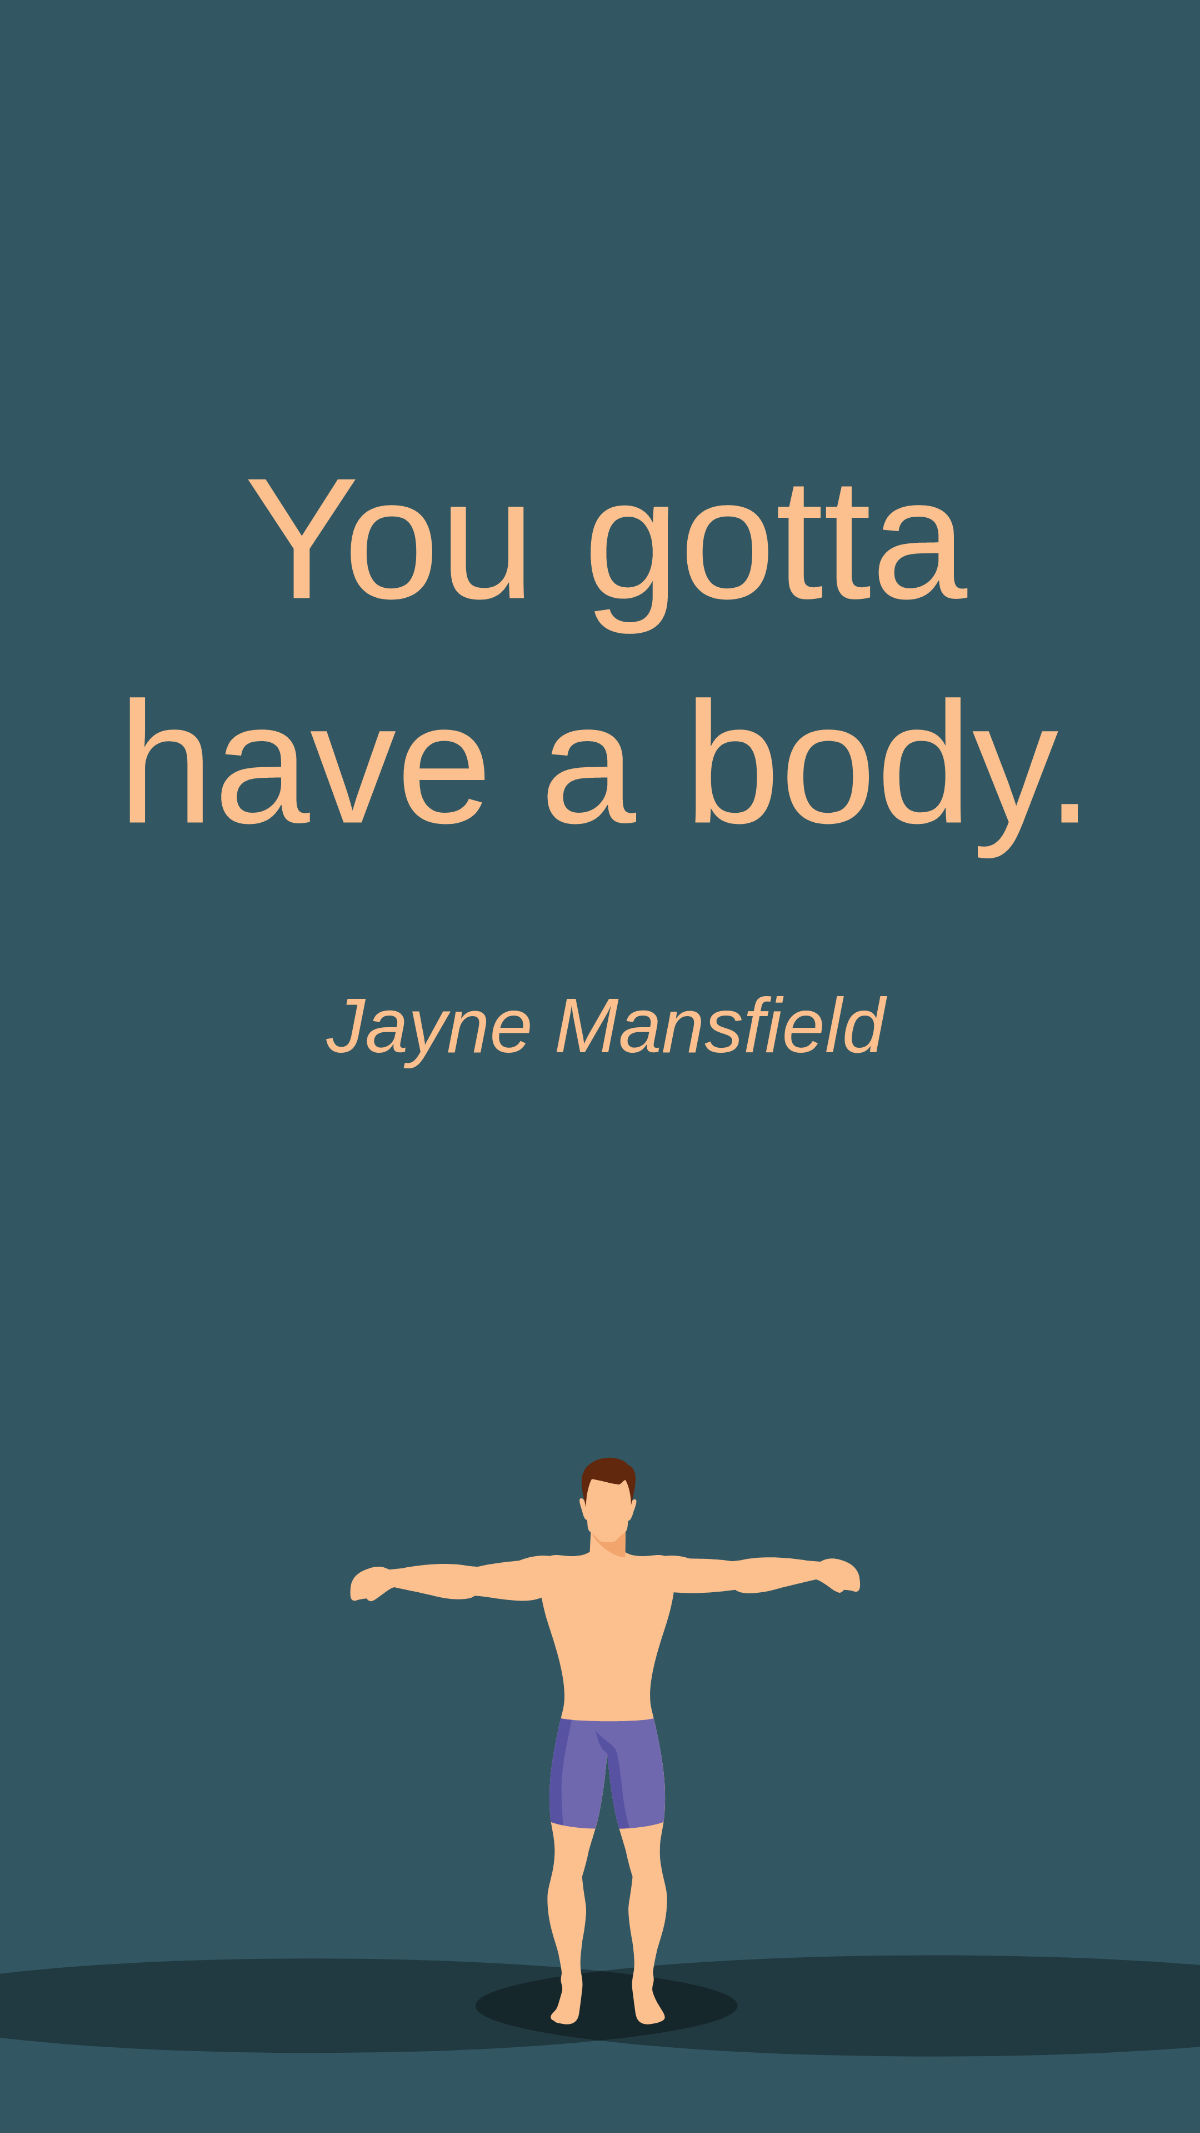 Jayne Mansfield - You gotta have a body.